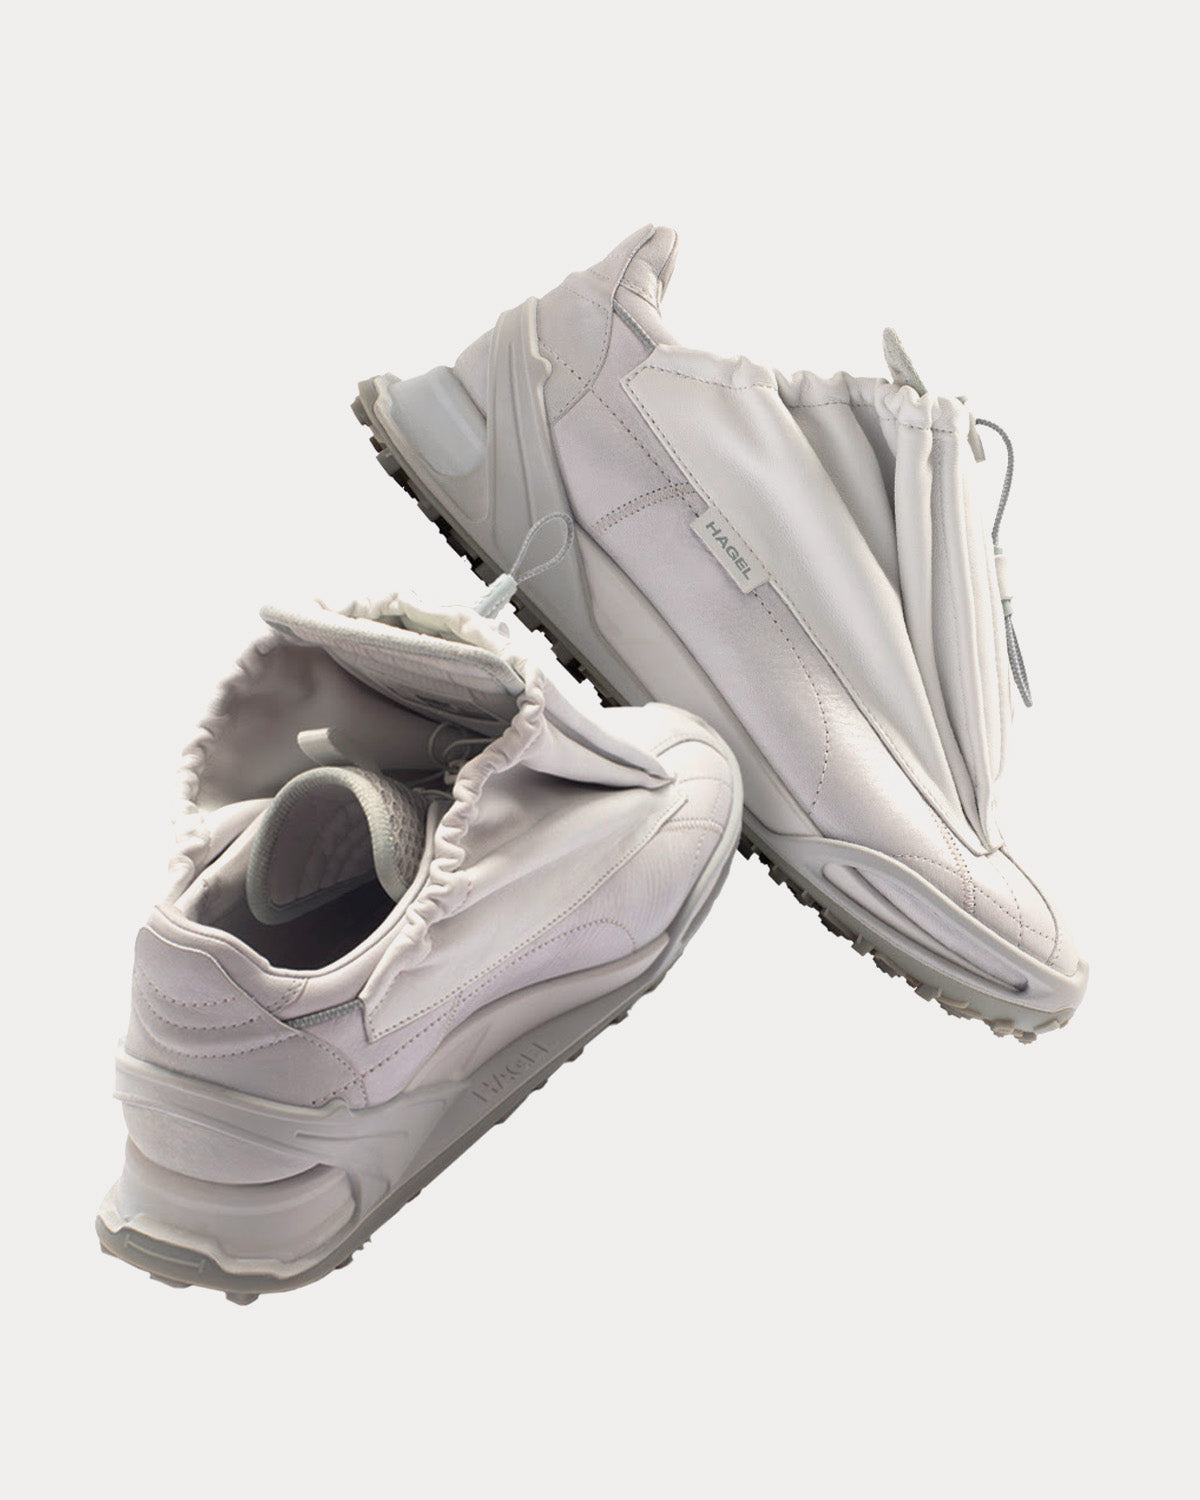 Studio Hagel - Shroud Ice White Low Top Sneakers